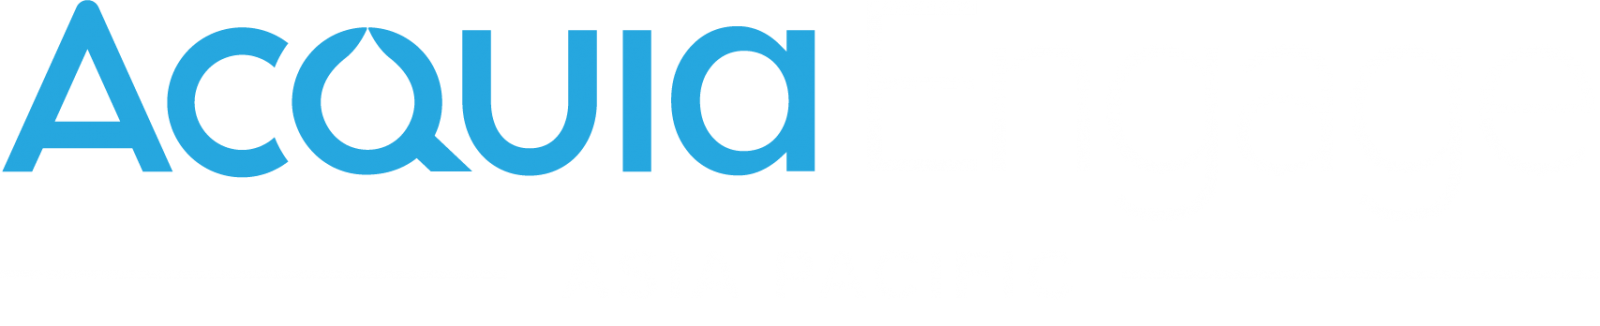 Aquia Logo - 6 Reasons to Attend Acquia Engage APAC 2019 | Acquia